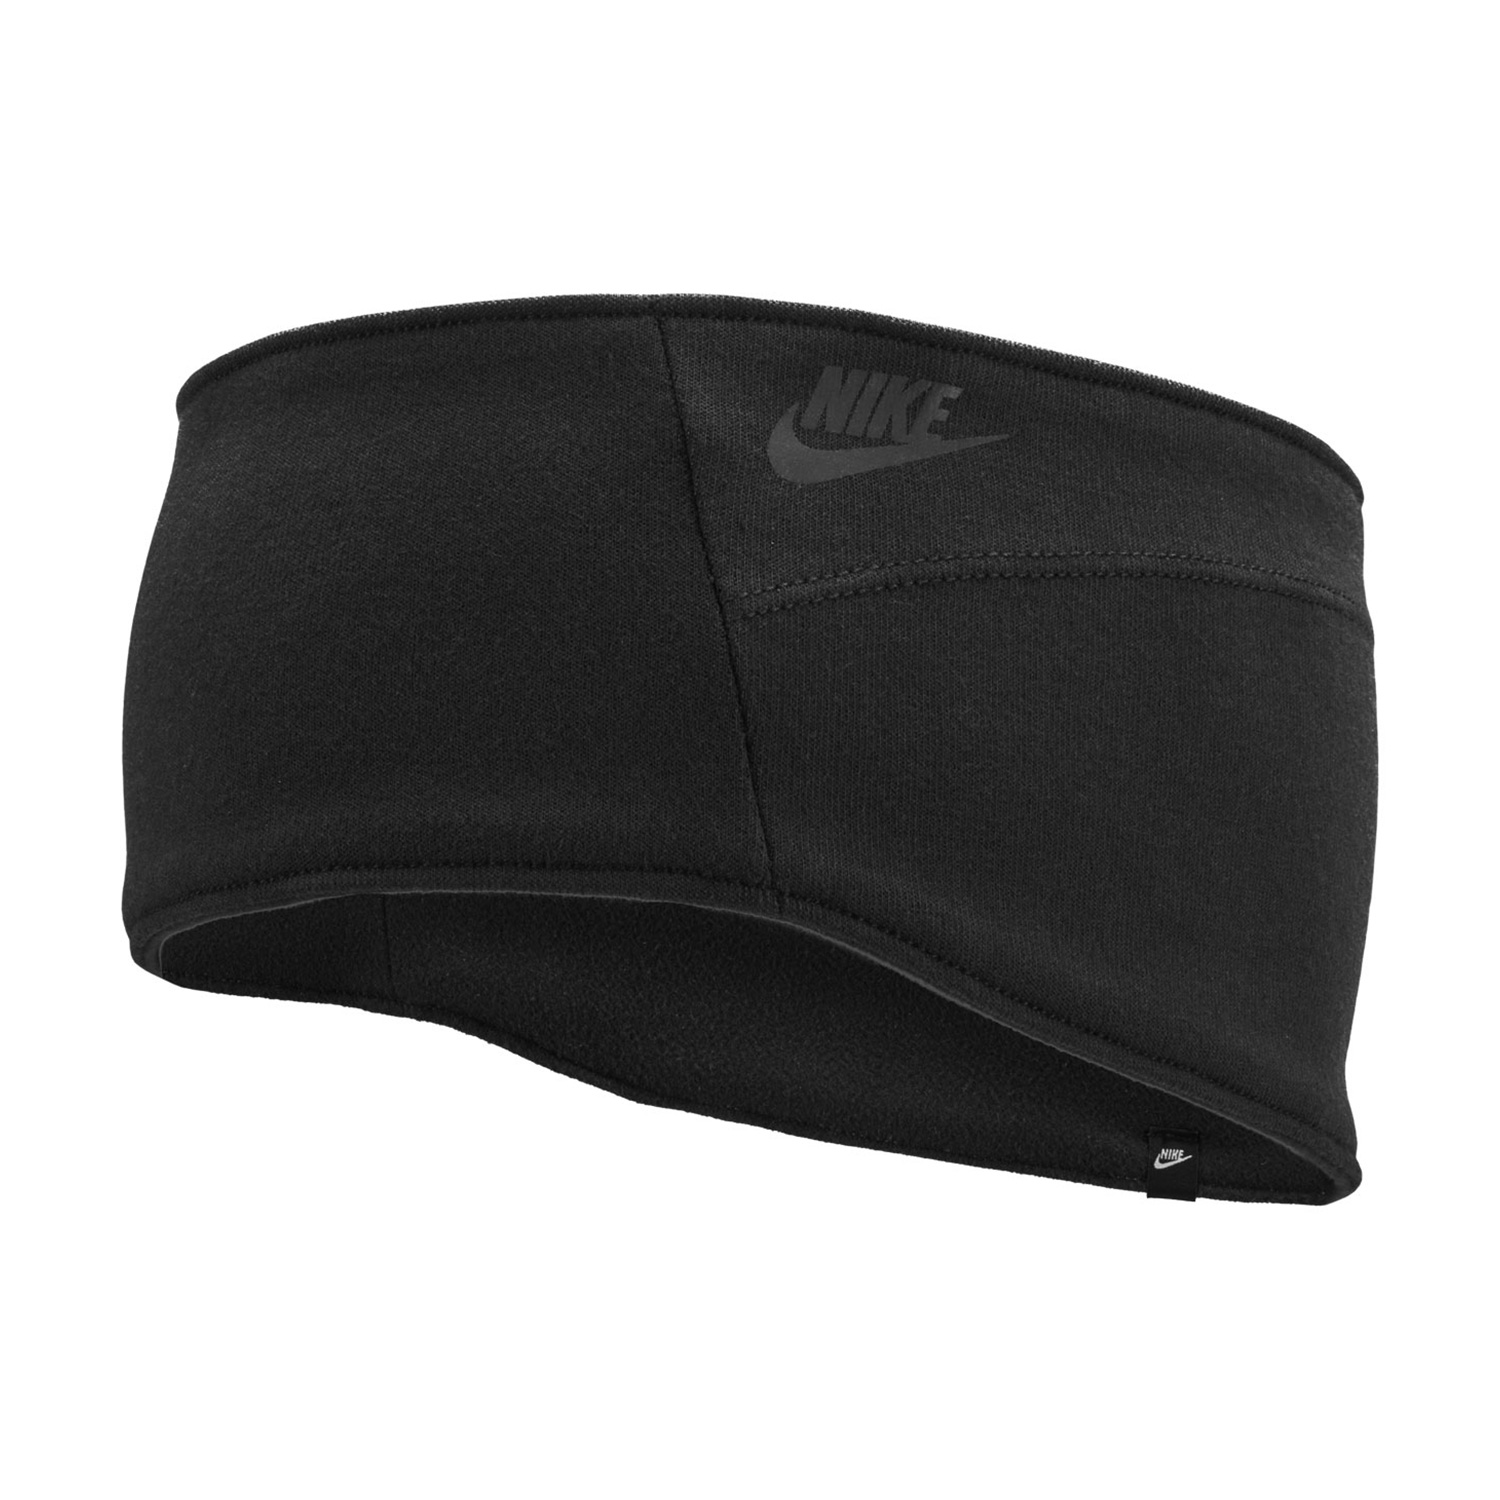 Nike Therma Fit Tech Headband - Black